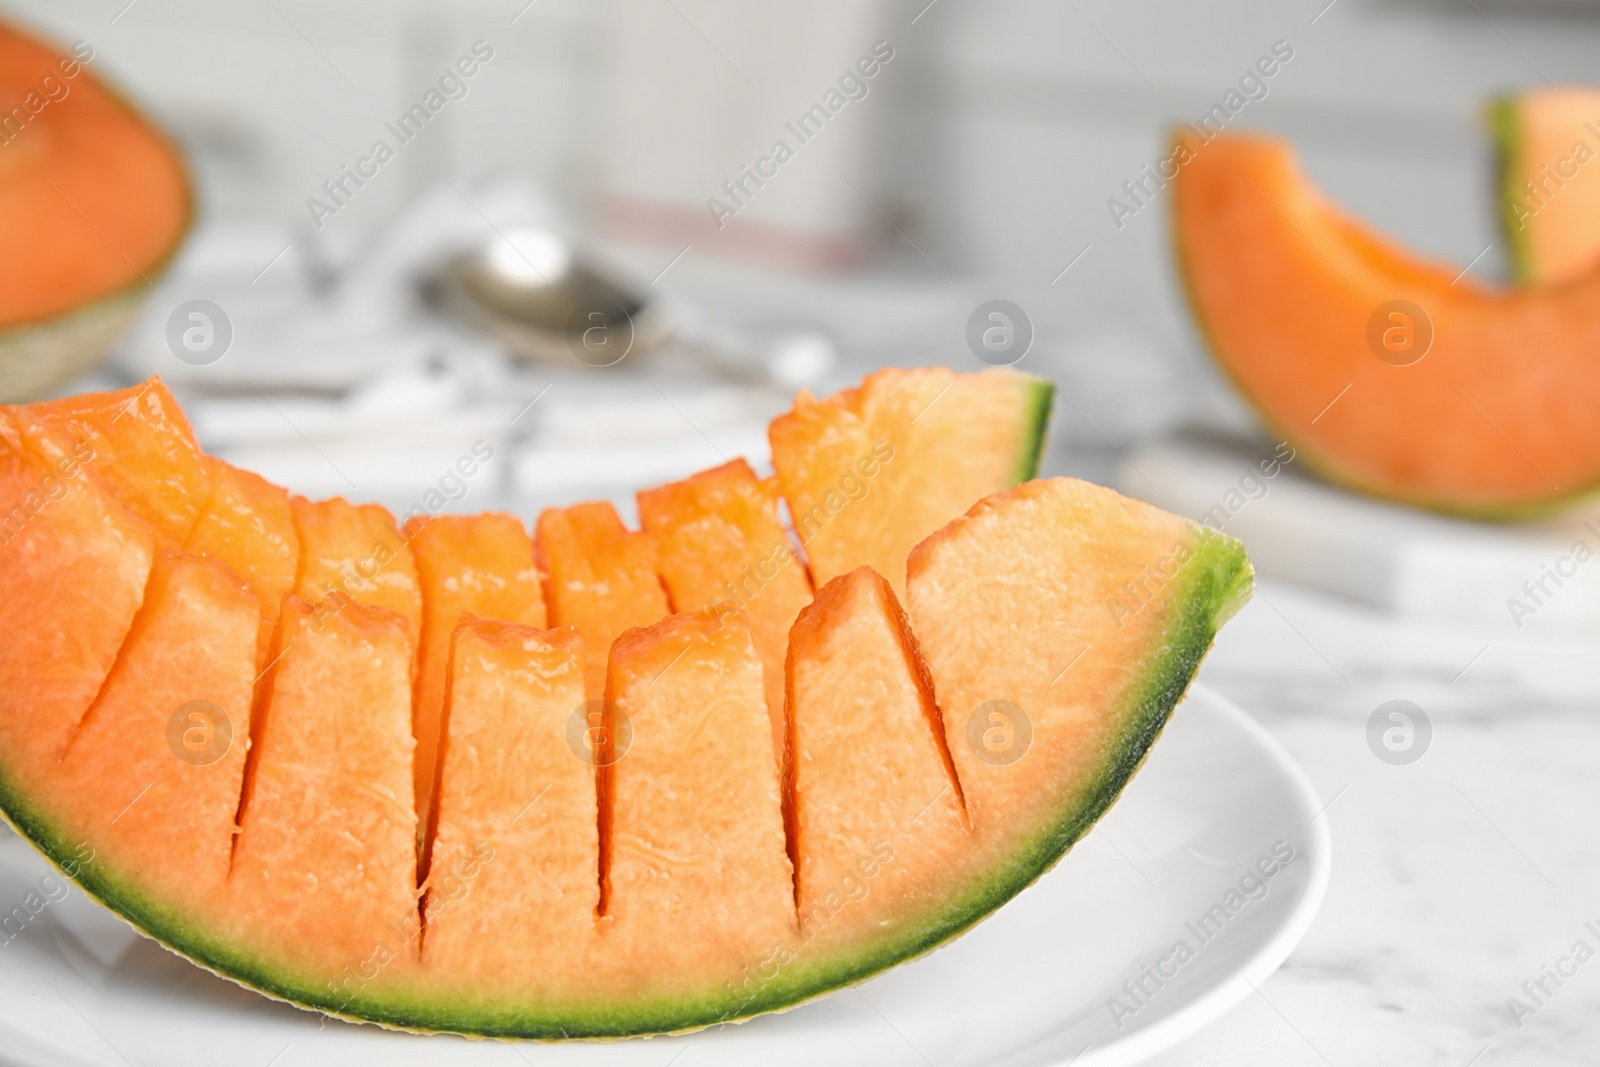 Photo of Slices of ripe cantaloupe melon on marble table, closeup